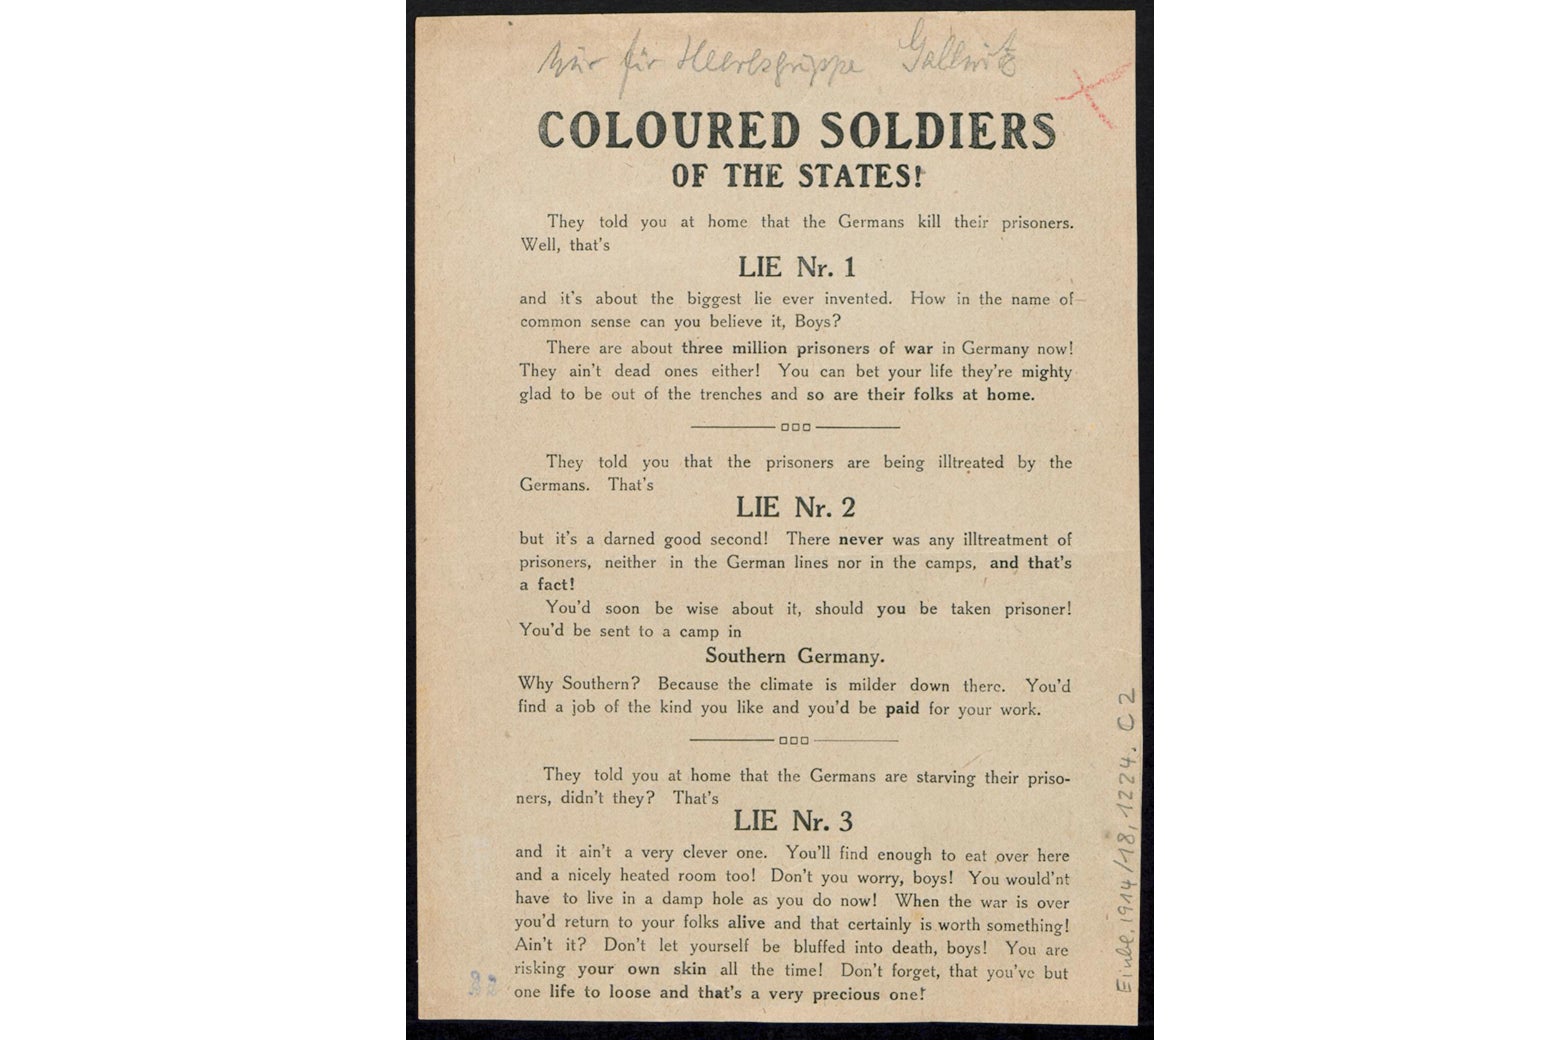 A world war I propaganda flyer; the text is transcribed below.